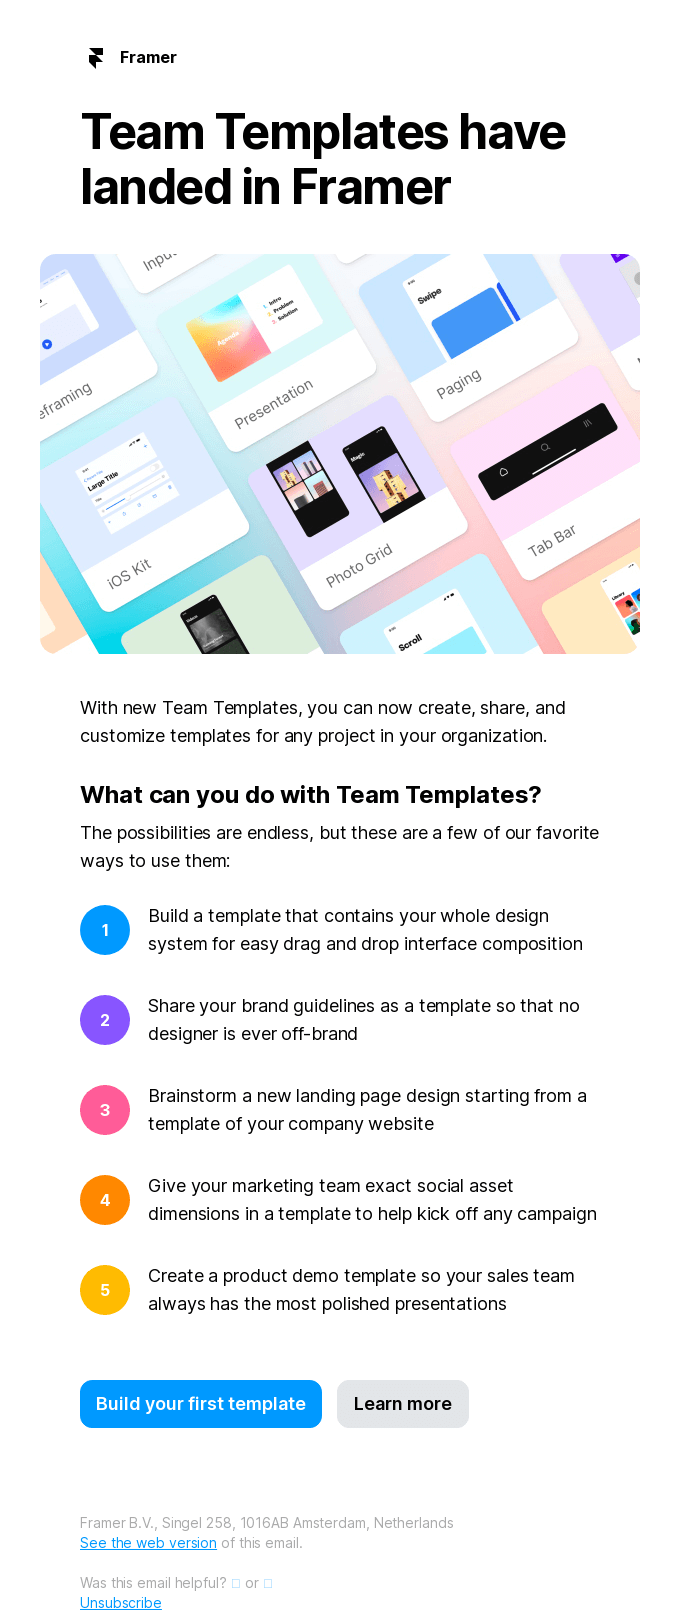 New from Framer: Team Templates for your whole organization - Framer Email Newsletter